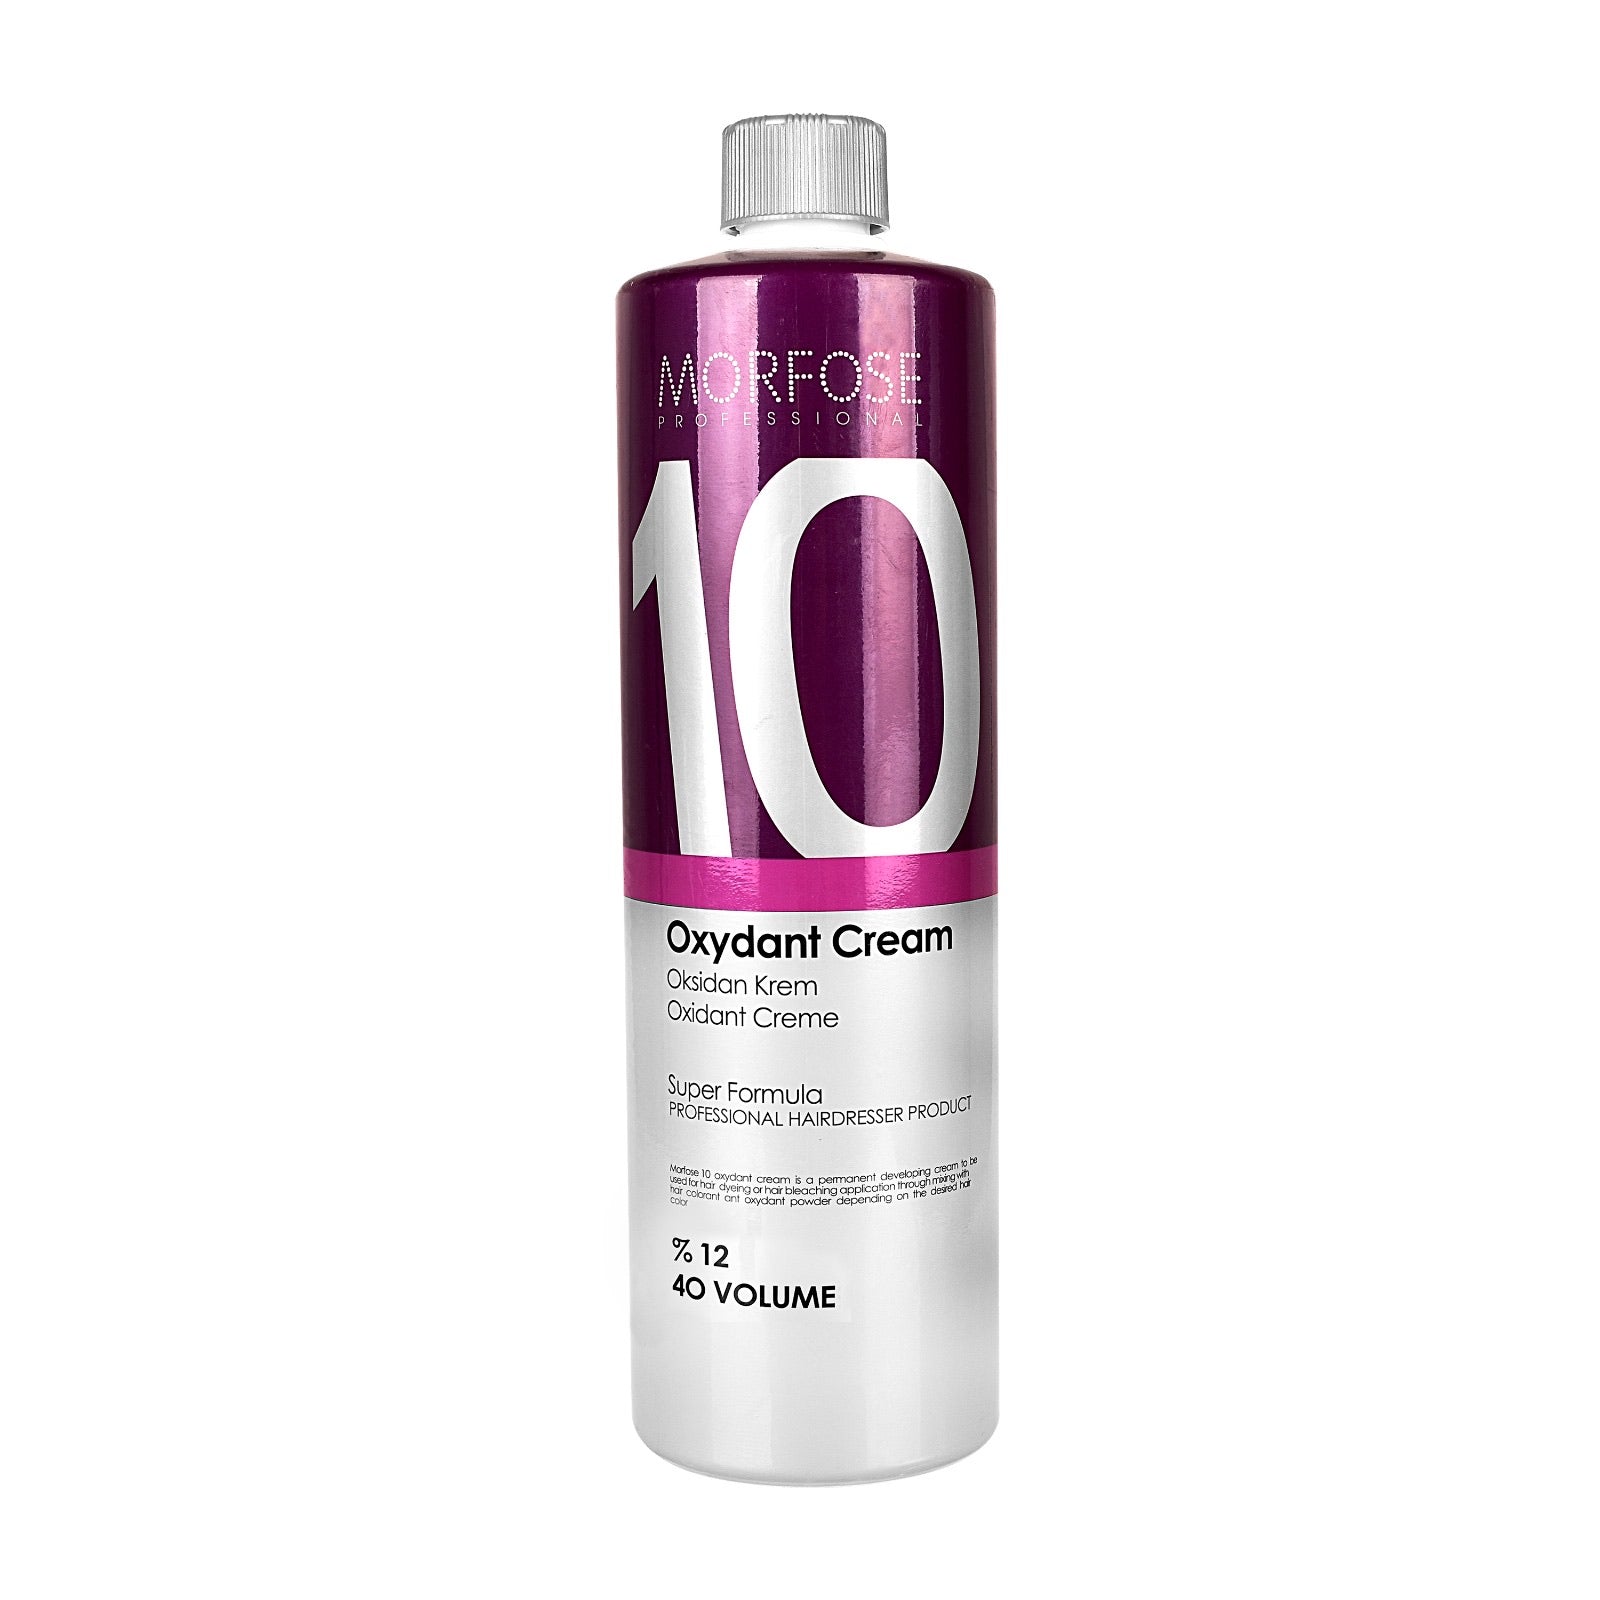 Morfose - 10 Oxidant Cream 40 Volume 1000ml